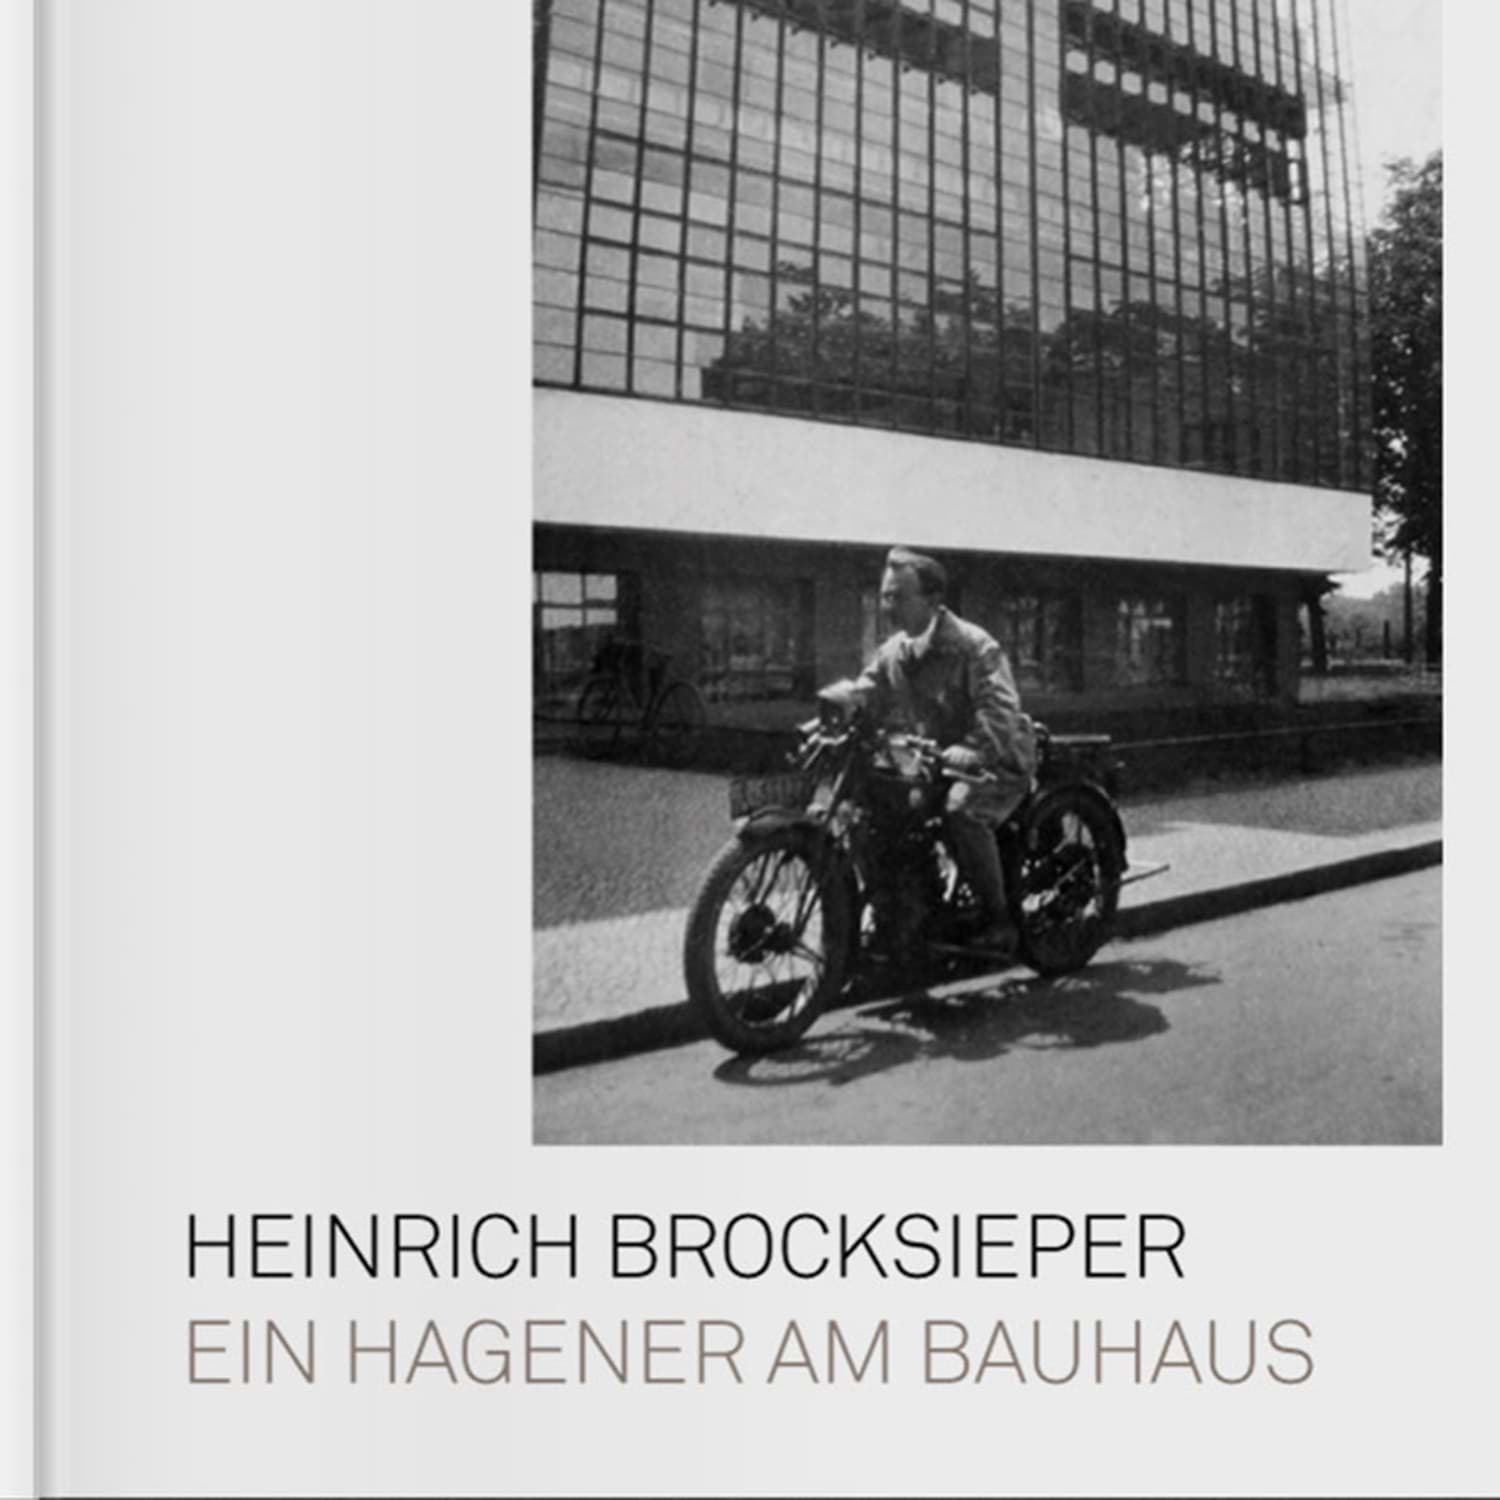 صورة Ein Hagener am Bauhaus
